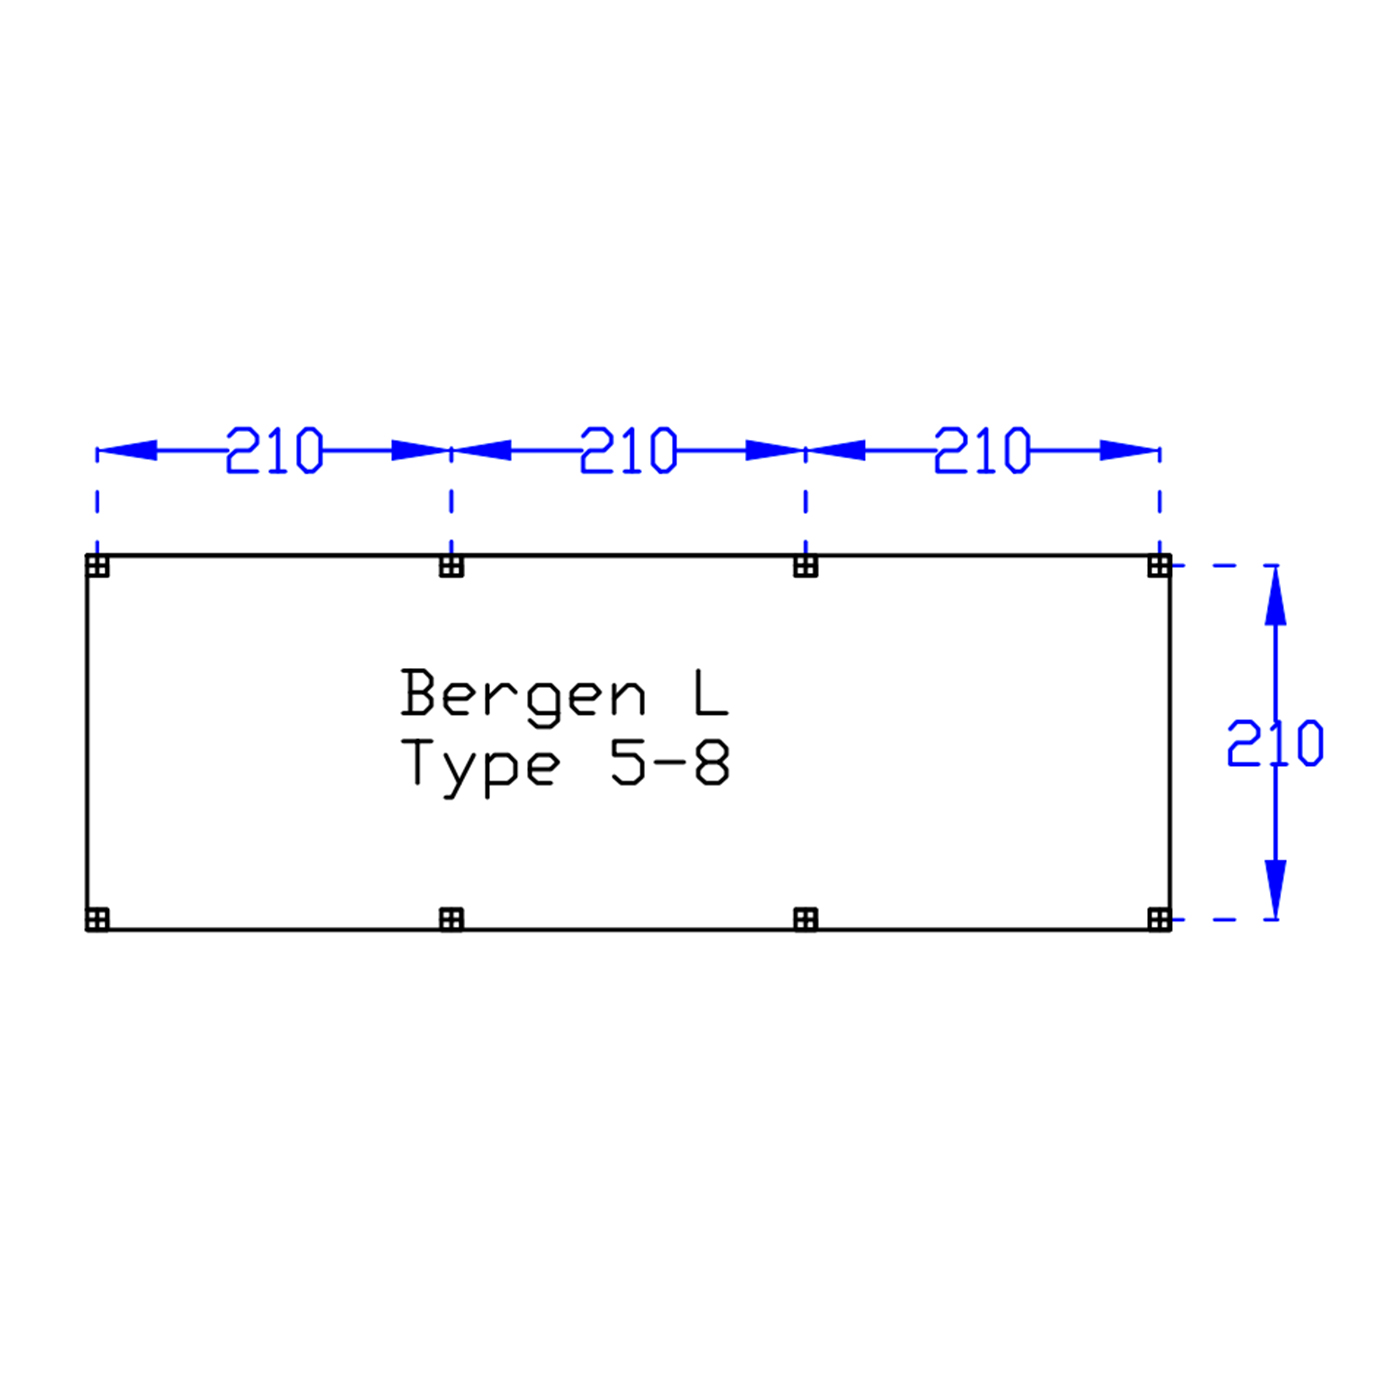 Bergen L type 5